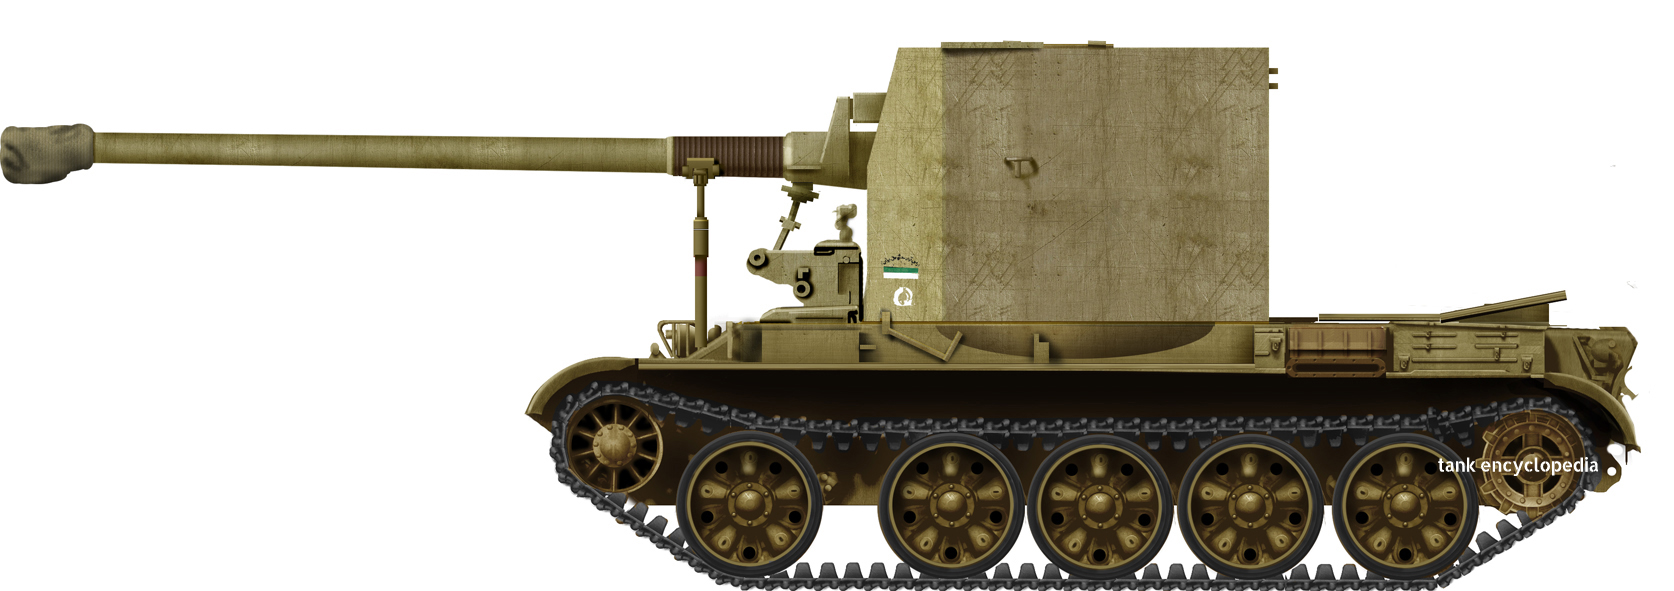 T 55 130 Self Propelled Gun Tank Encyclopedia